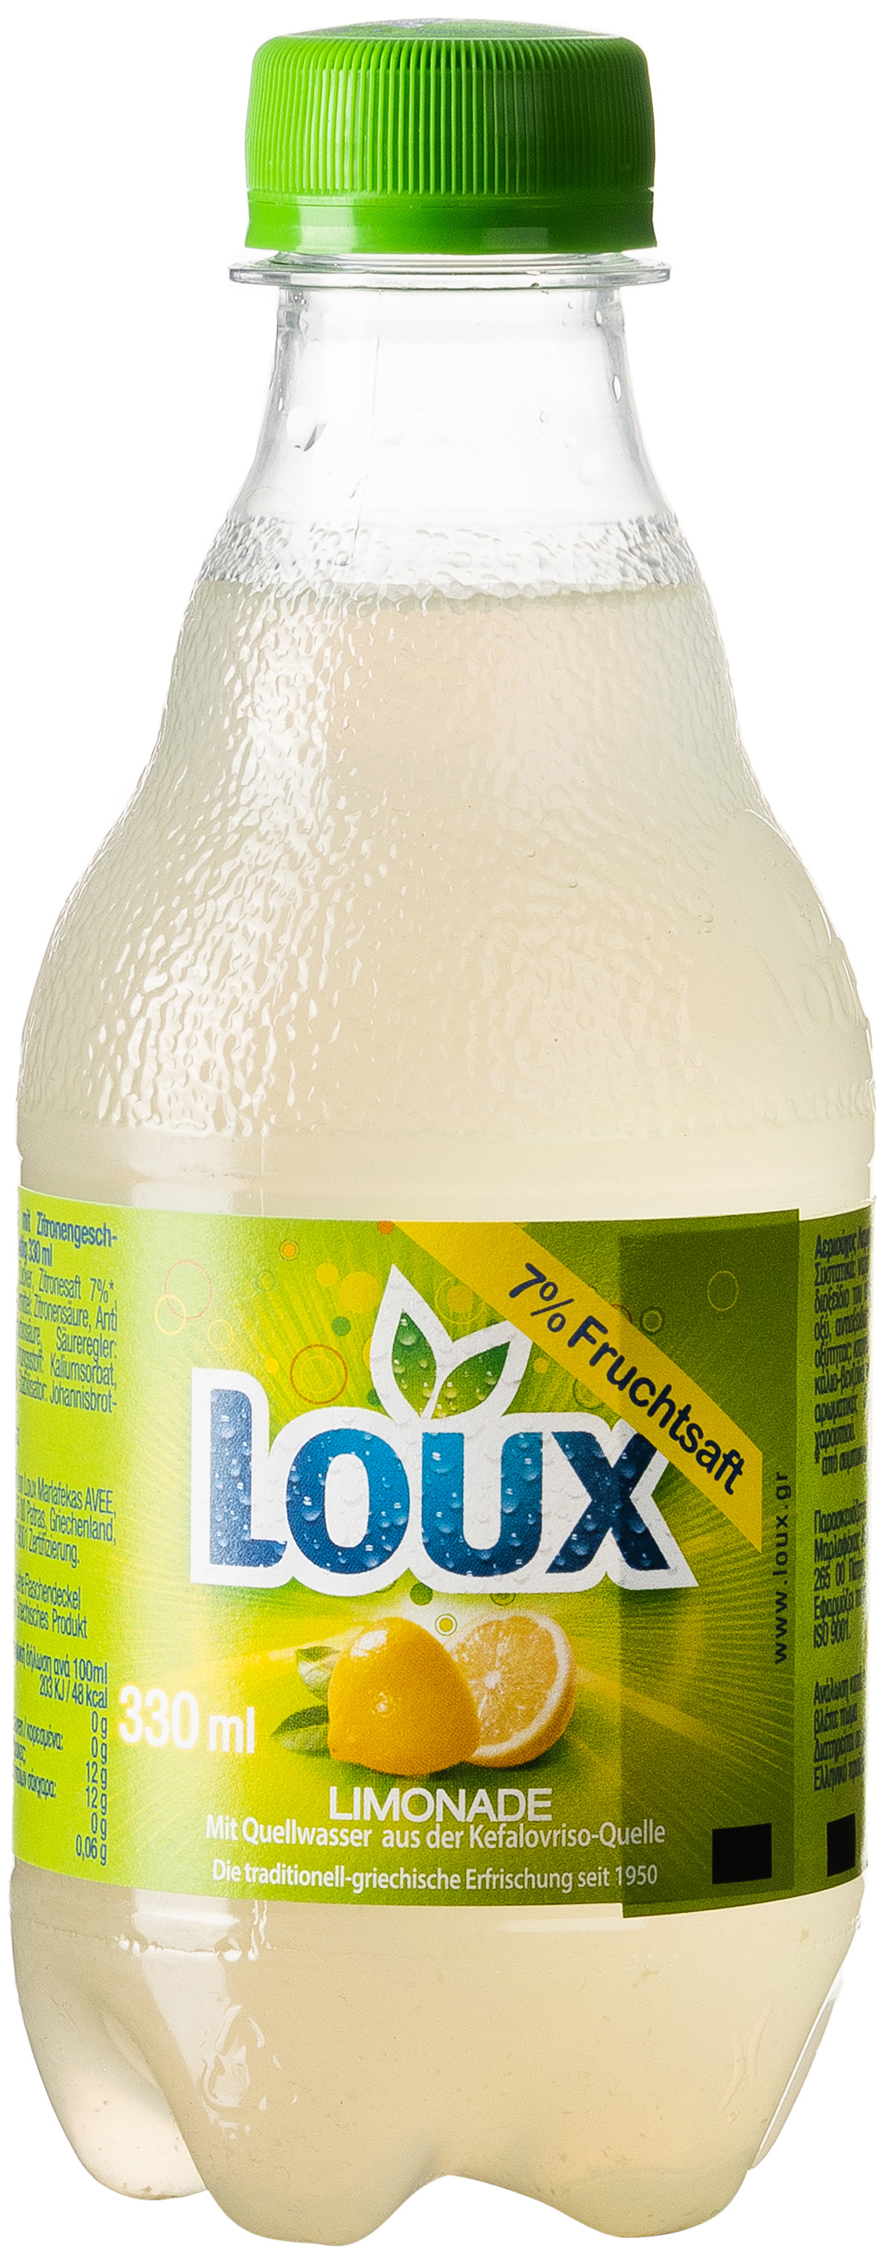 Loux Zitronen Limonade 0,33L EINWEG